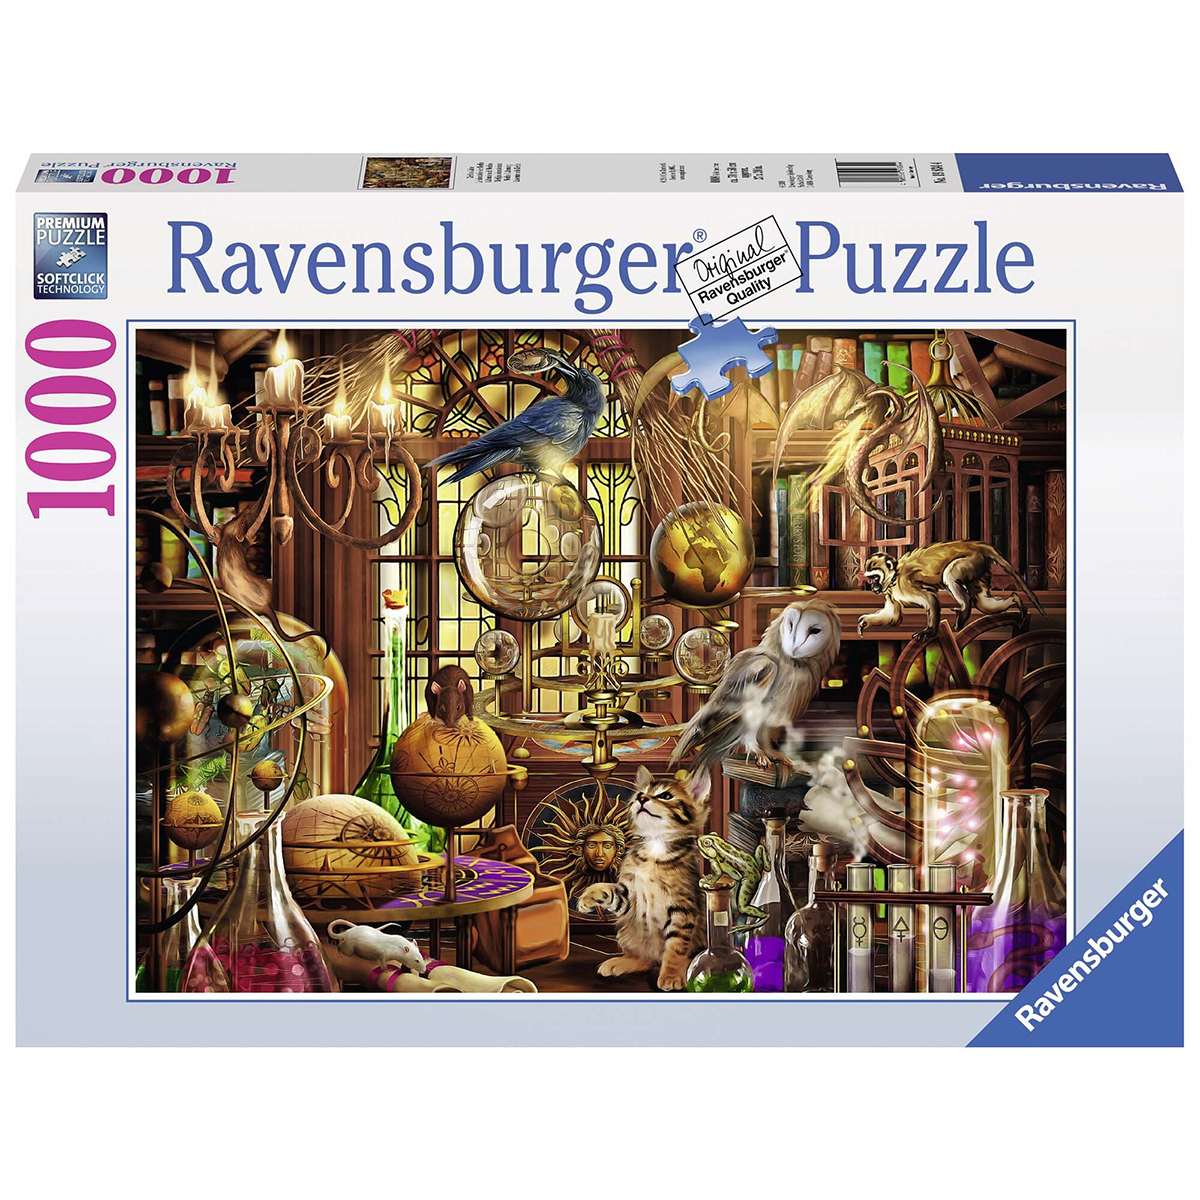 Puzzle Ravensburger Laboratorio de Merlín de 1000 piezas